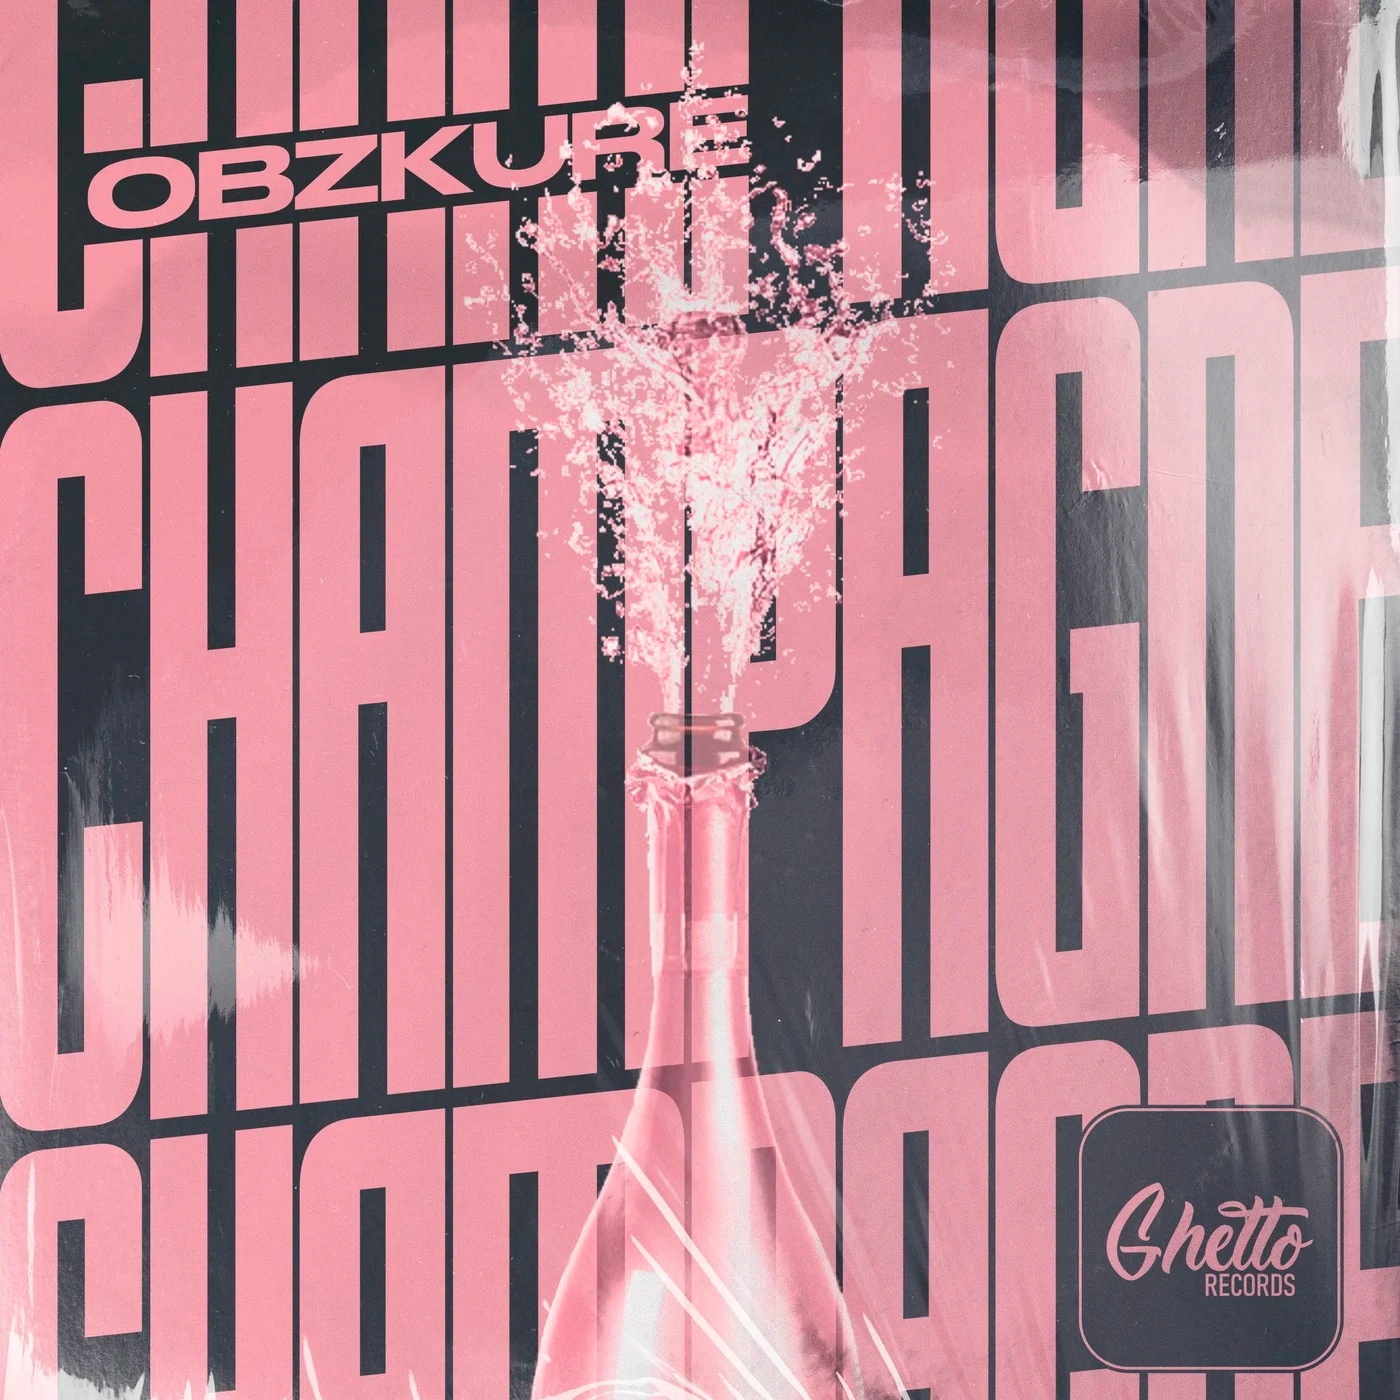 Obzkure - Champagne (Original Mix)